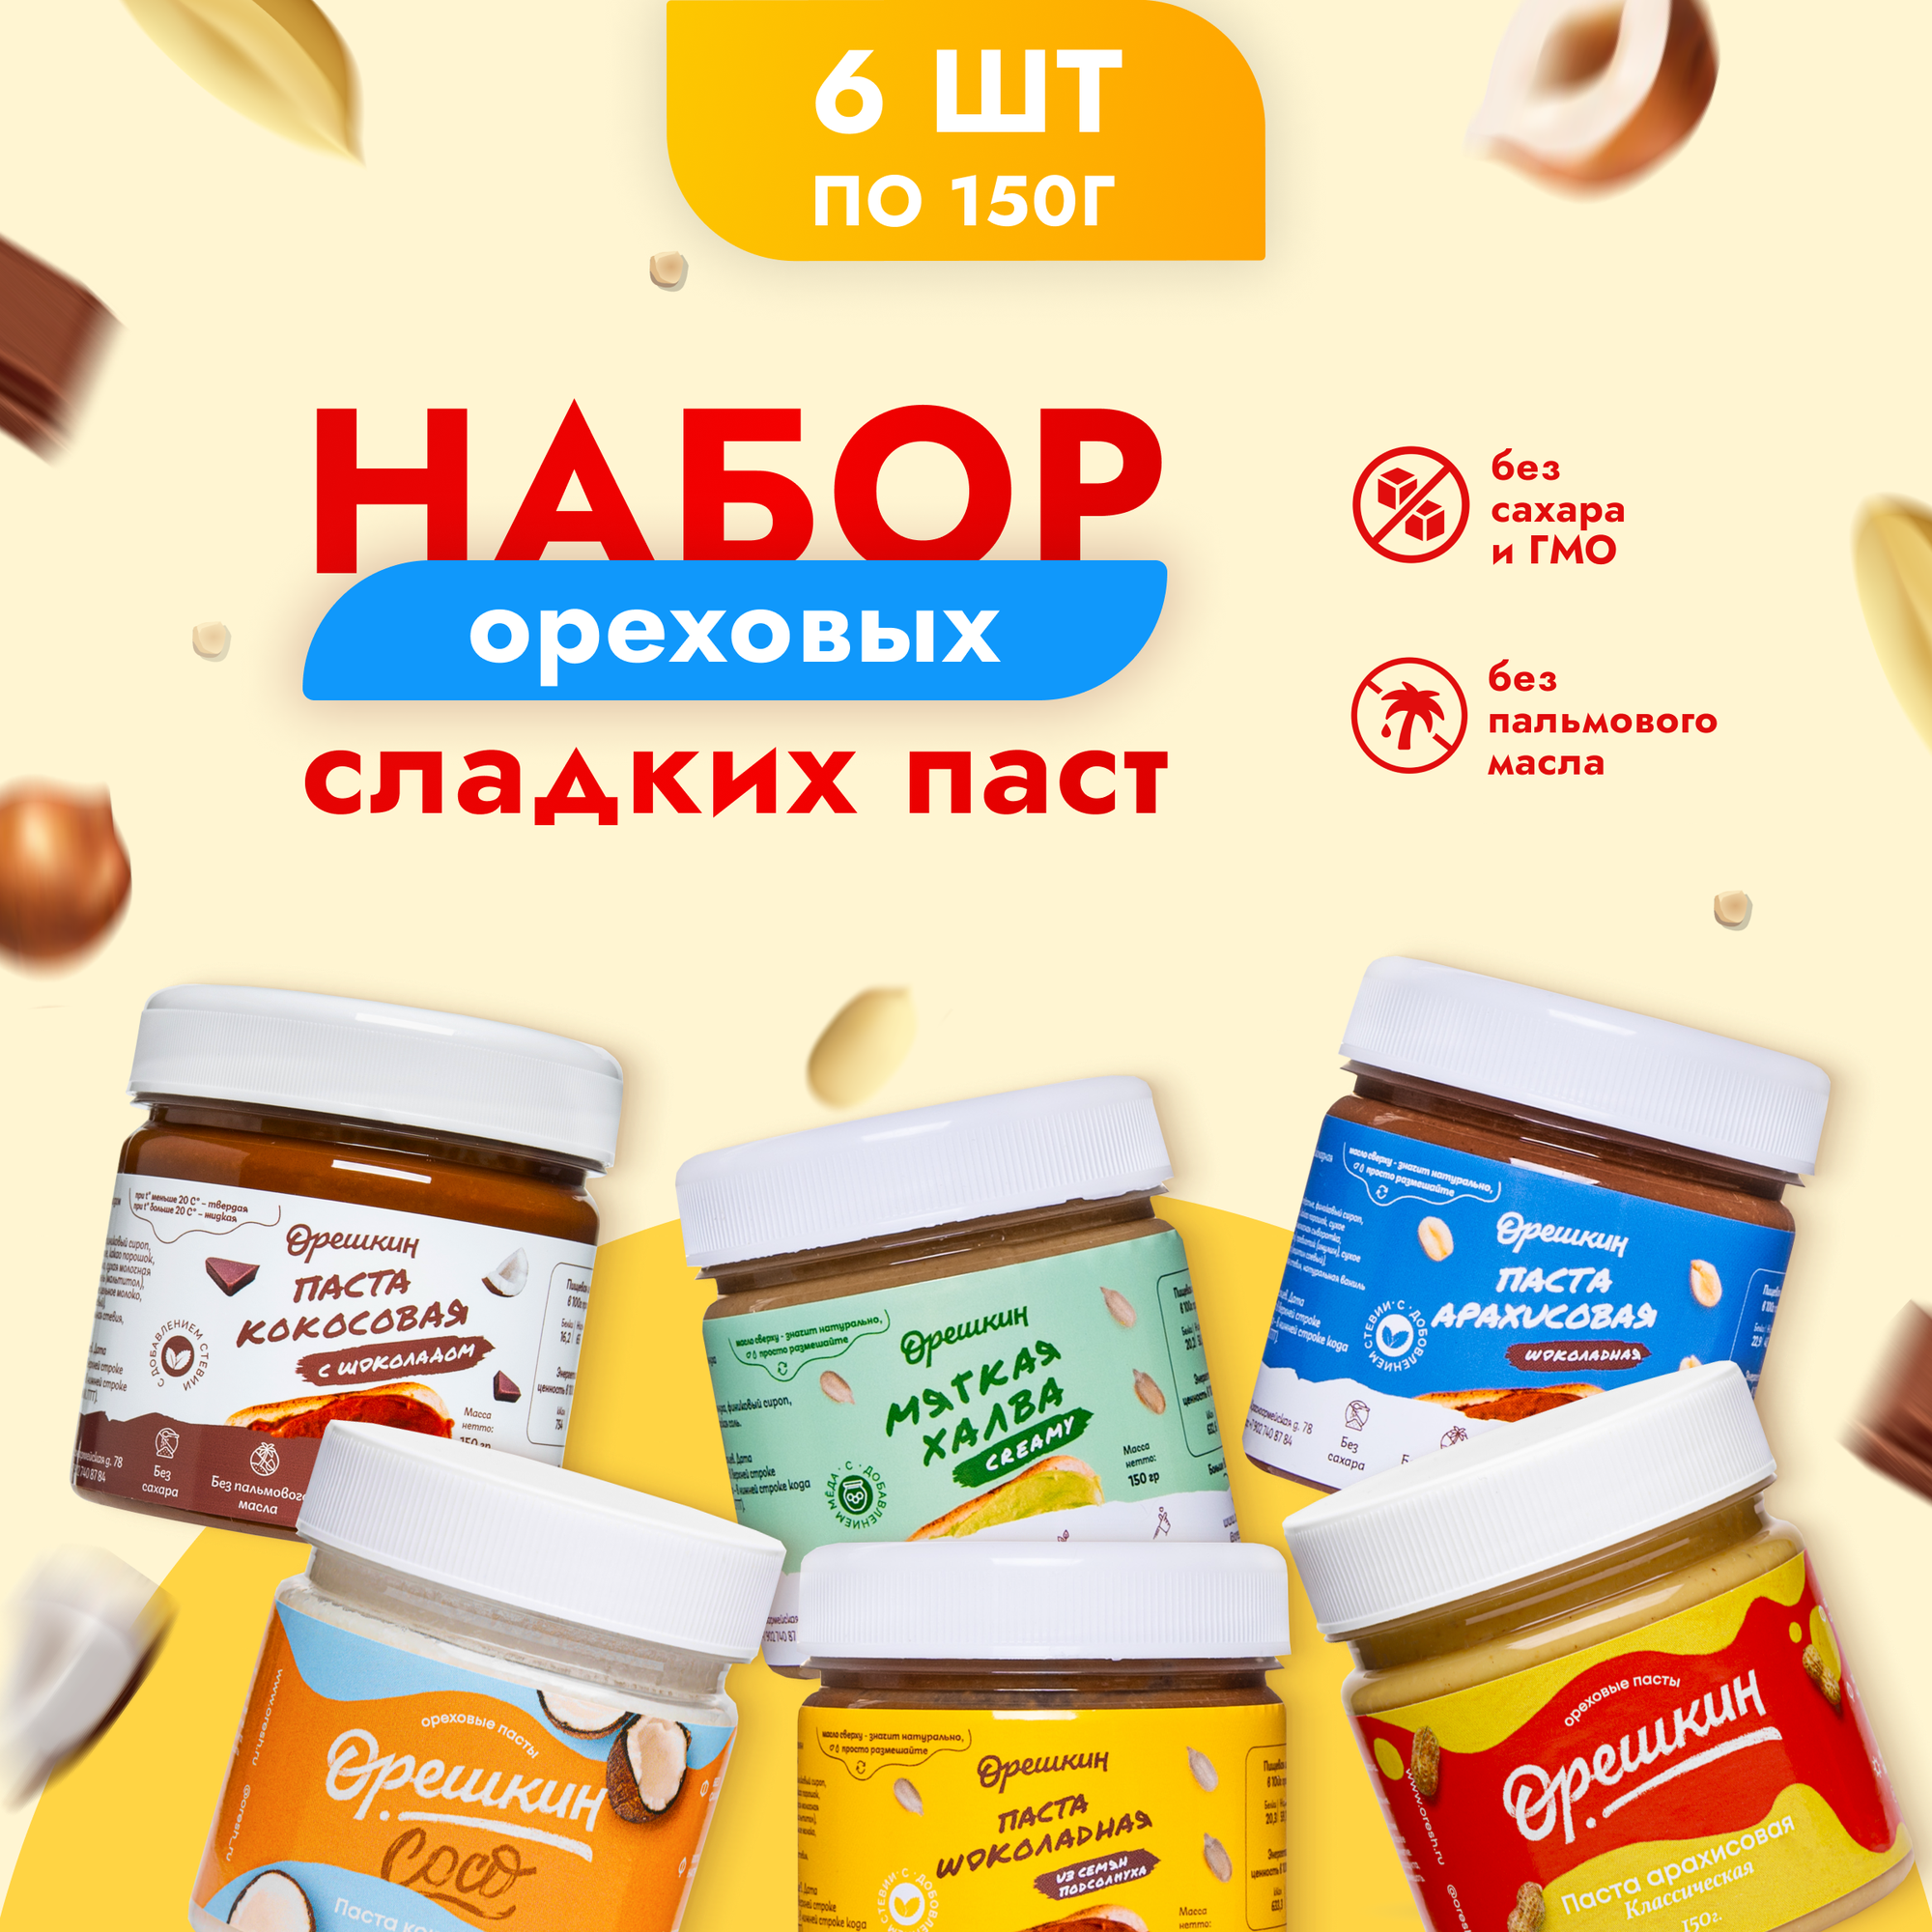 Набор ореховых паст "Орешкин" sweet&choco 6 шт/150 гр - фотография № 1